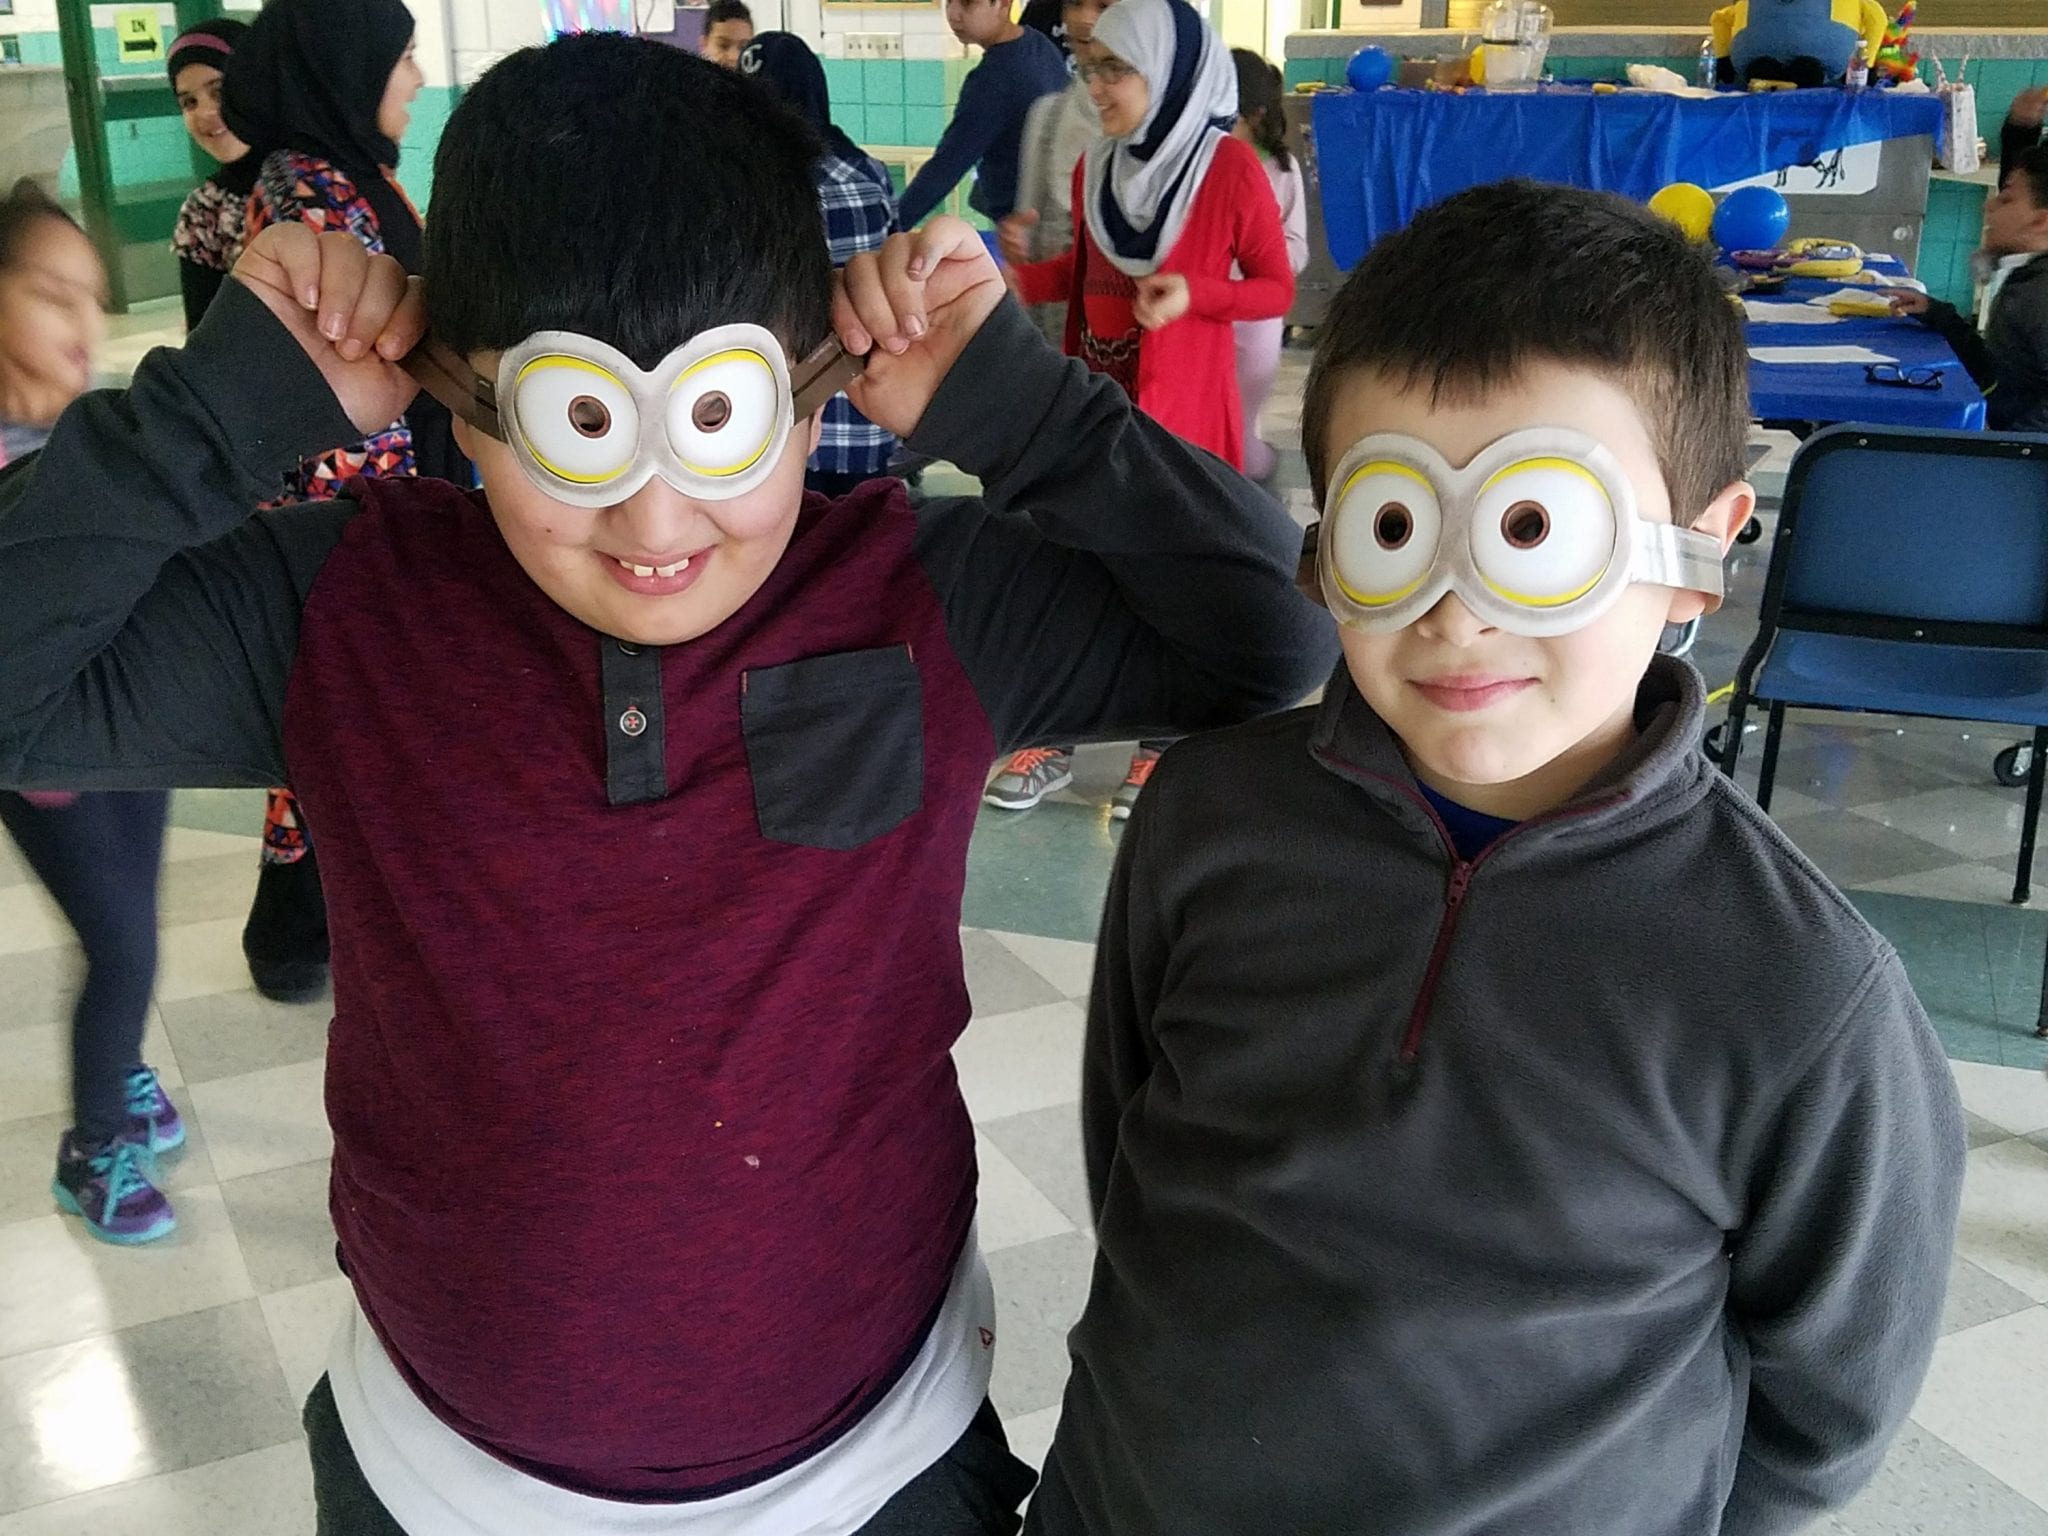 Students wearing Minion glasses